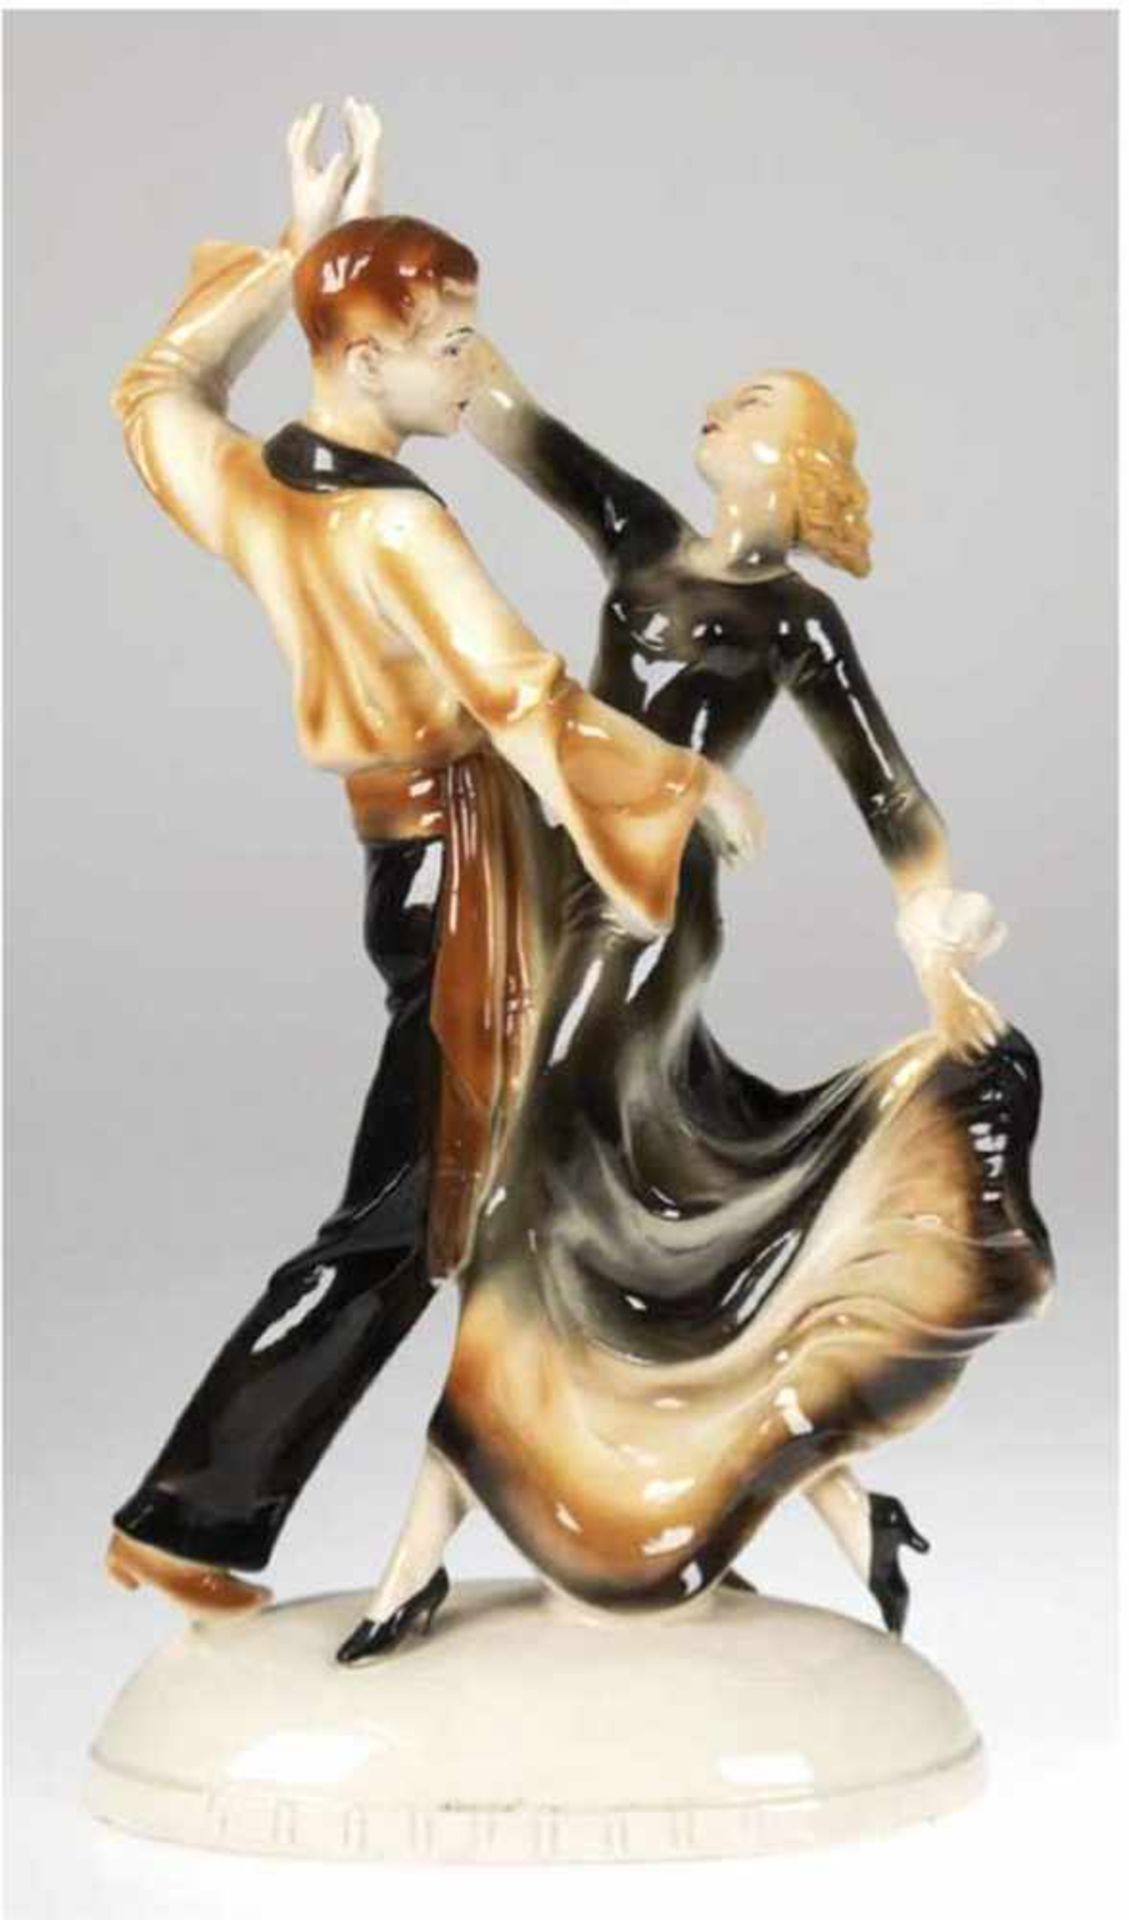 Art-Deco-Figurengruppe "Tanzendes Paar", Sitzendorf, Keramik, polychrom bemalt und